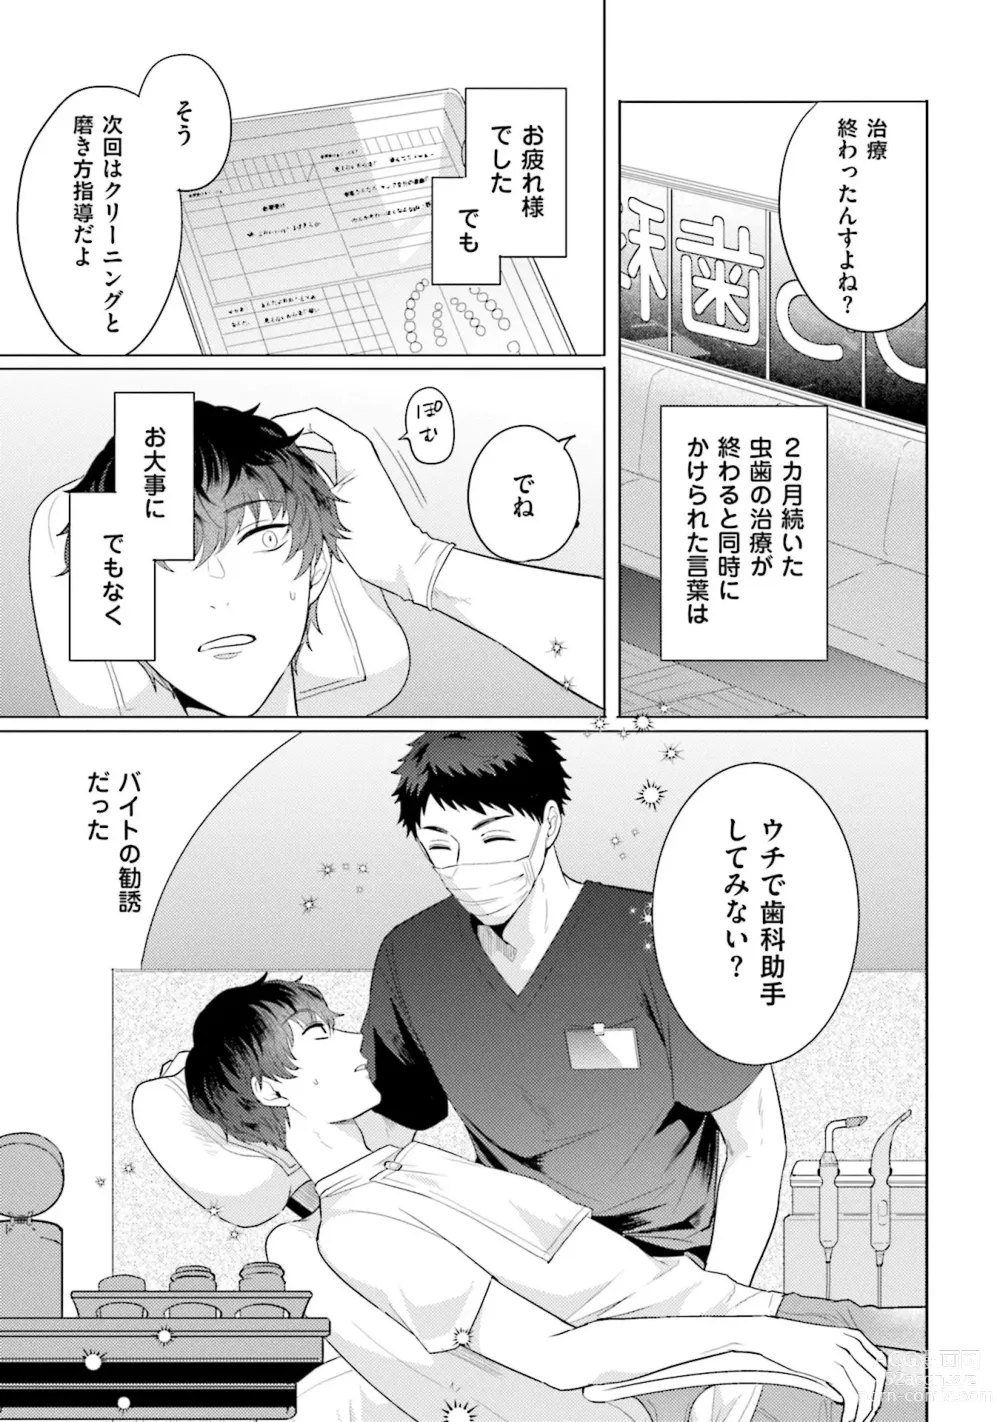 Page 7 of manga Rintarou-san no Iyarashi Clinic